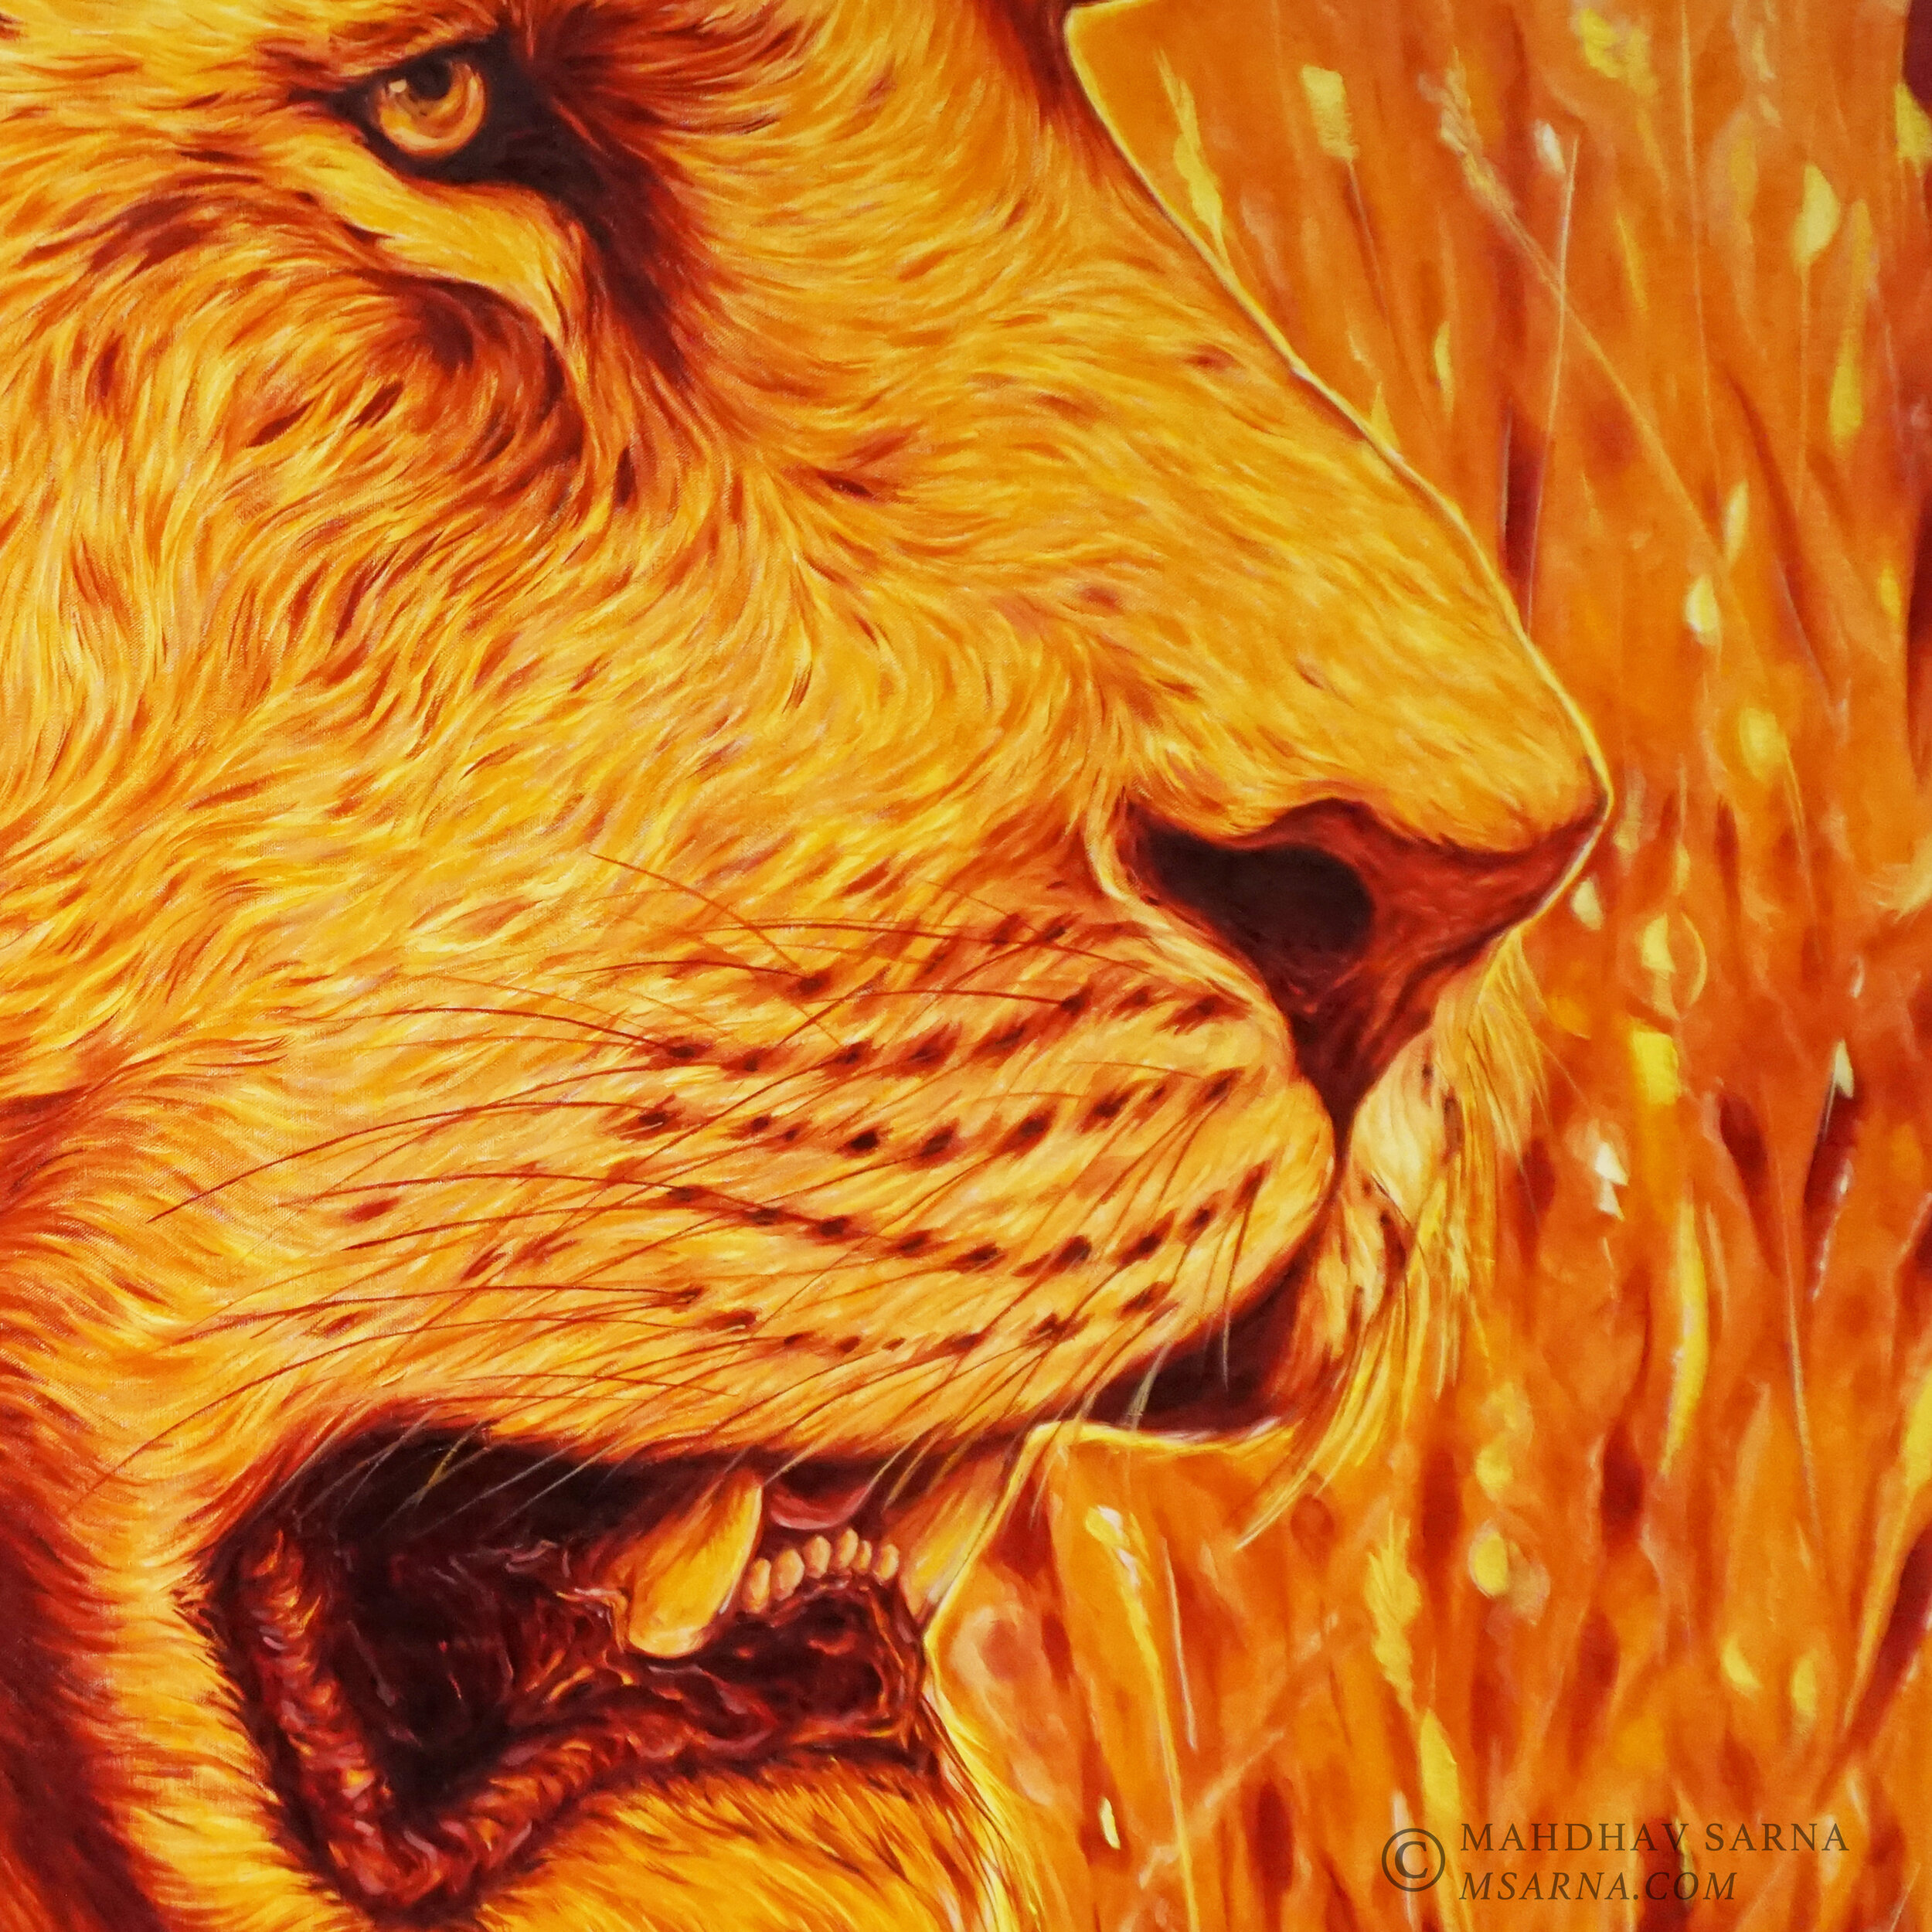 male lion oil painting tnpt wildlife art mahdhav sarna 02.jpg